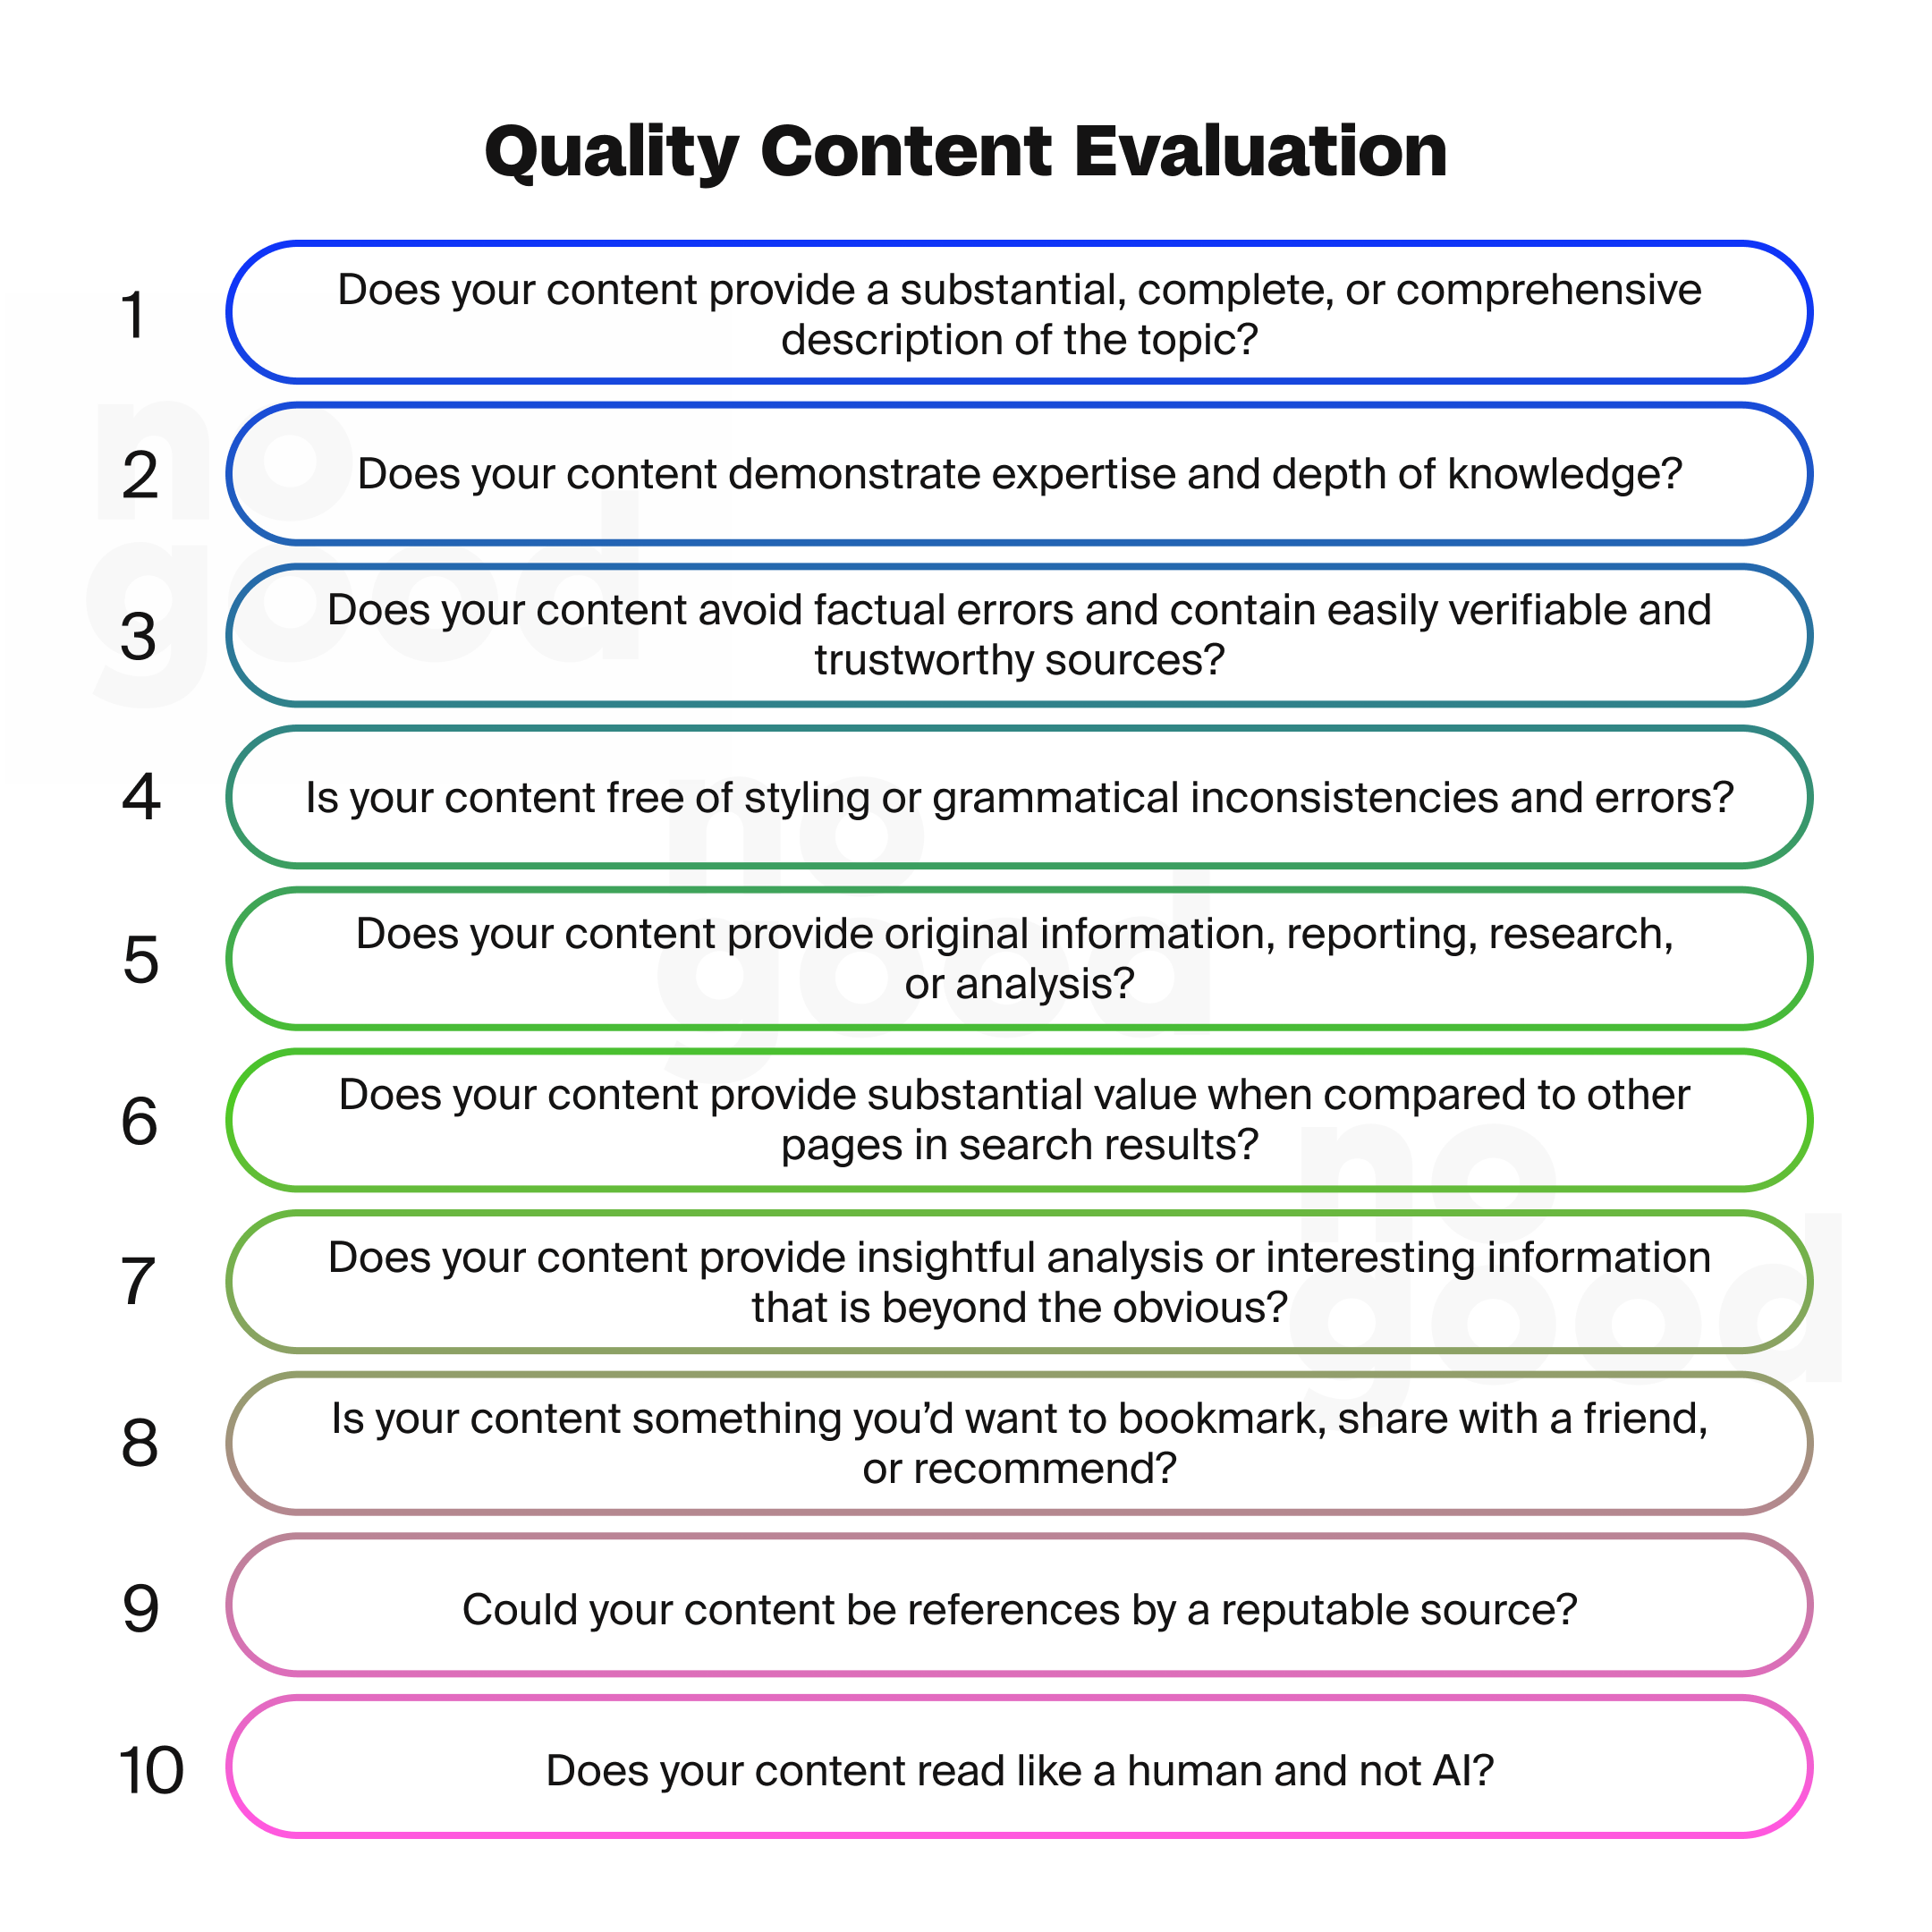 Quality Content Evaluation